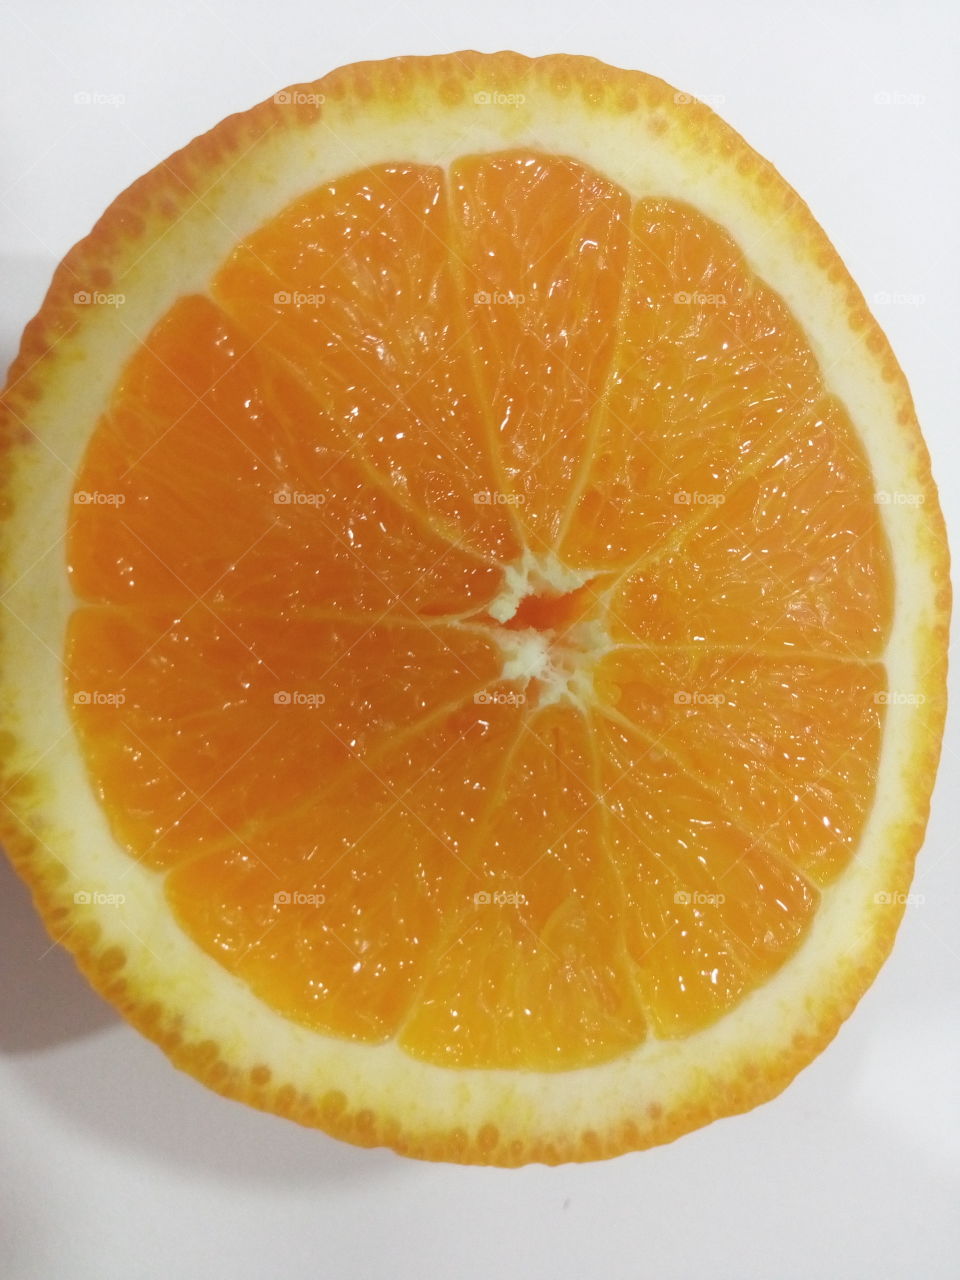 Juicy orange close up shot